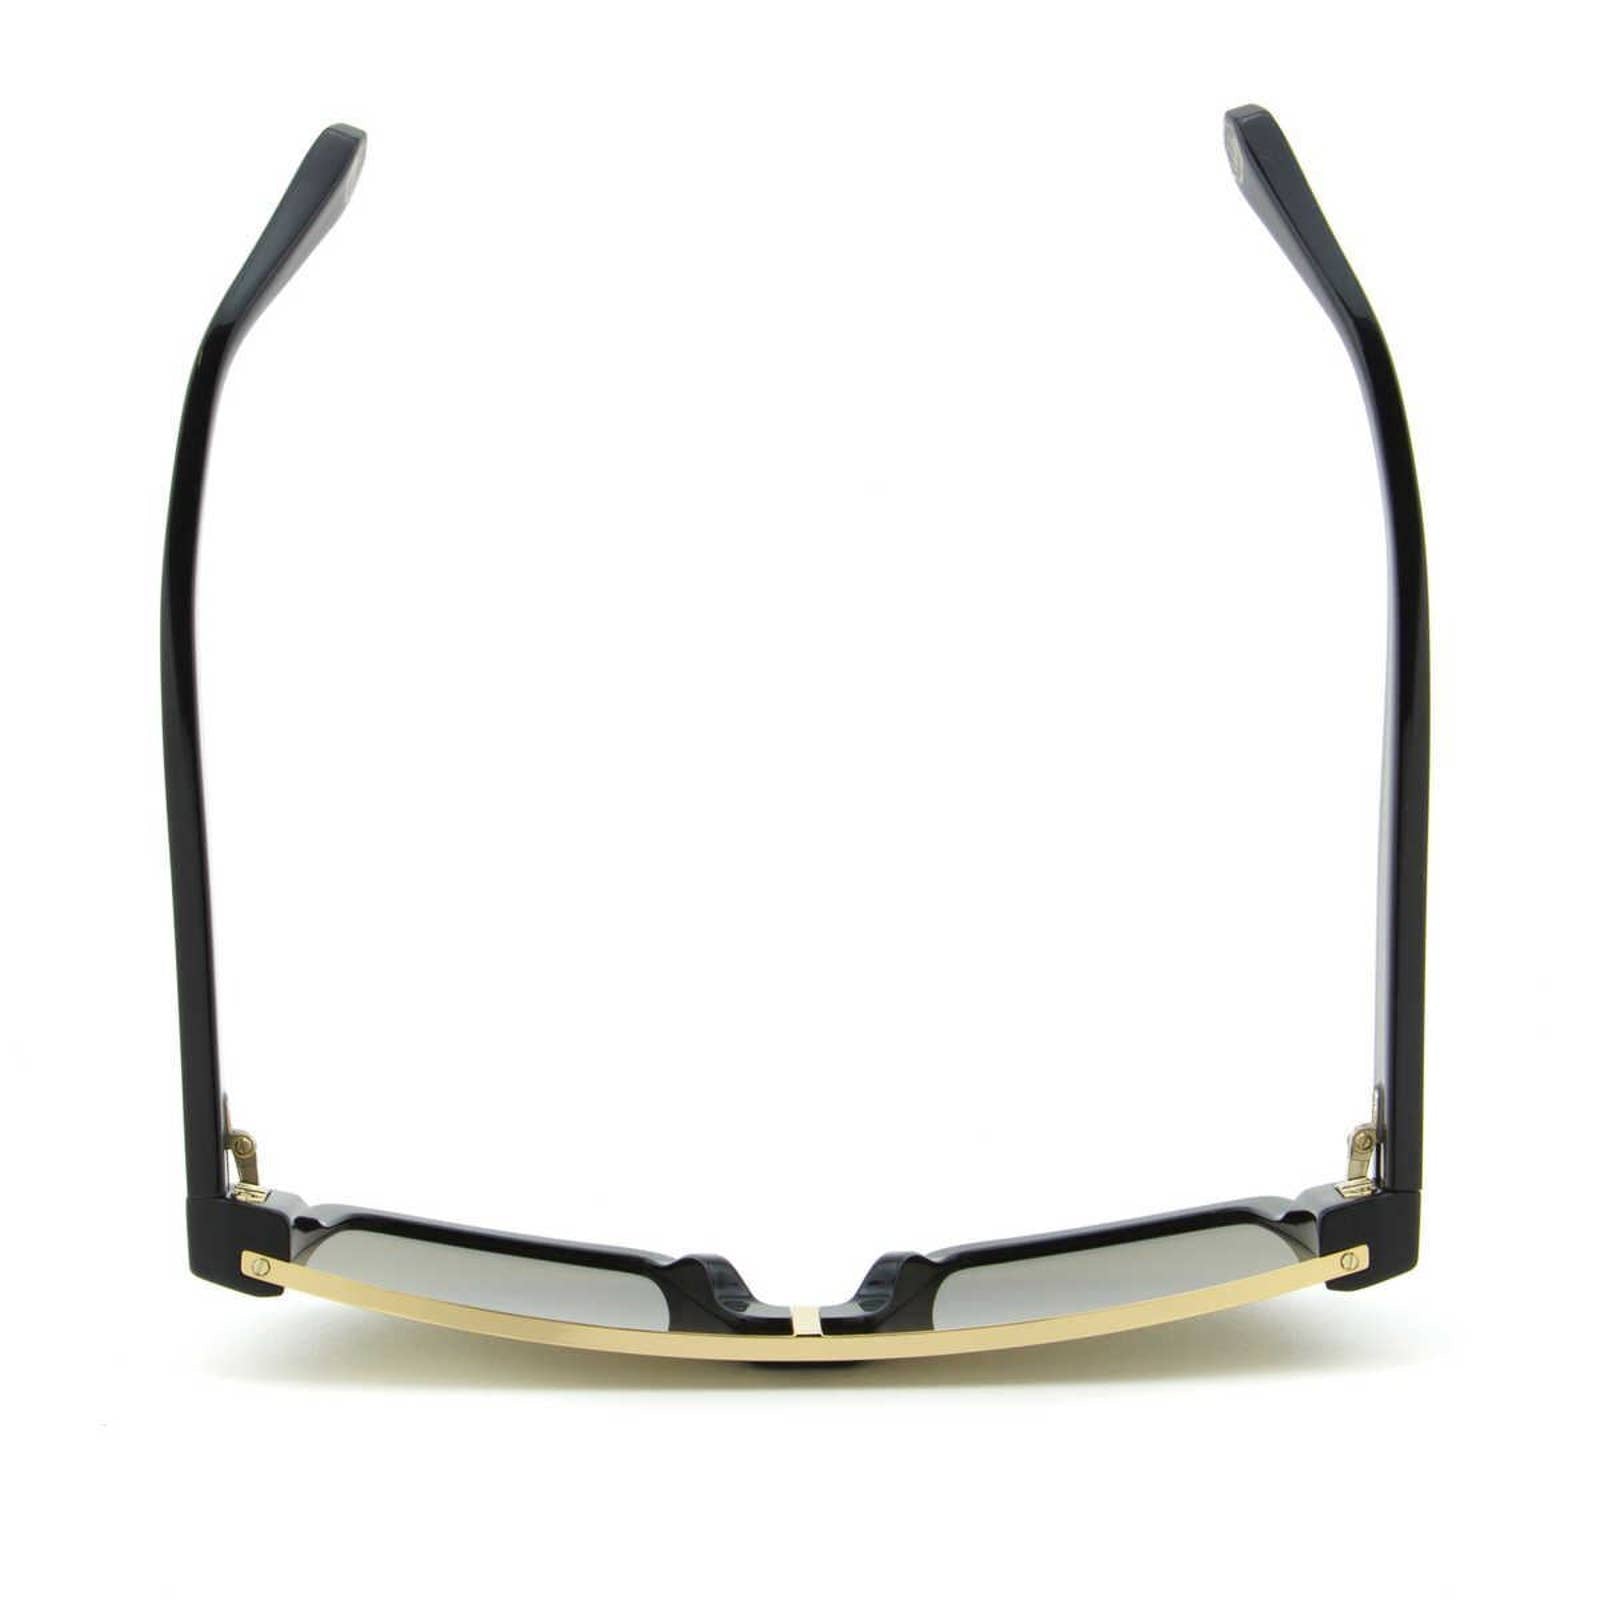 Men Square Shield Black Sunglasses SPP006M-700G Gold